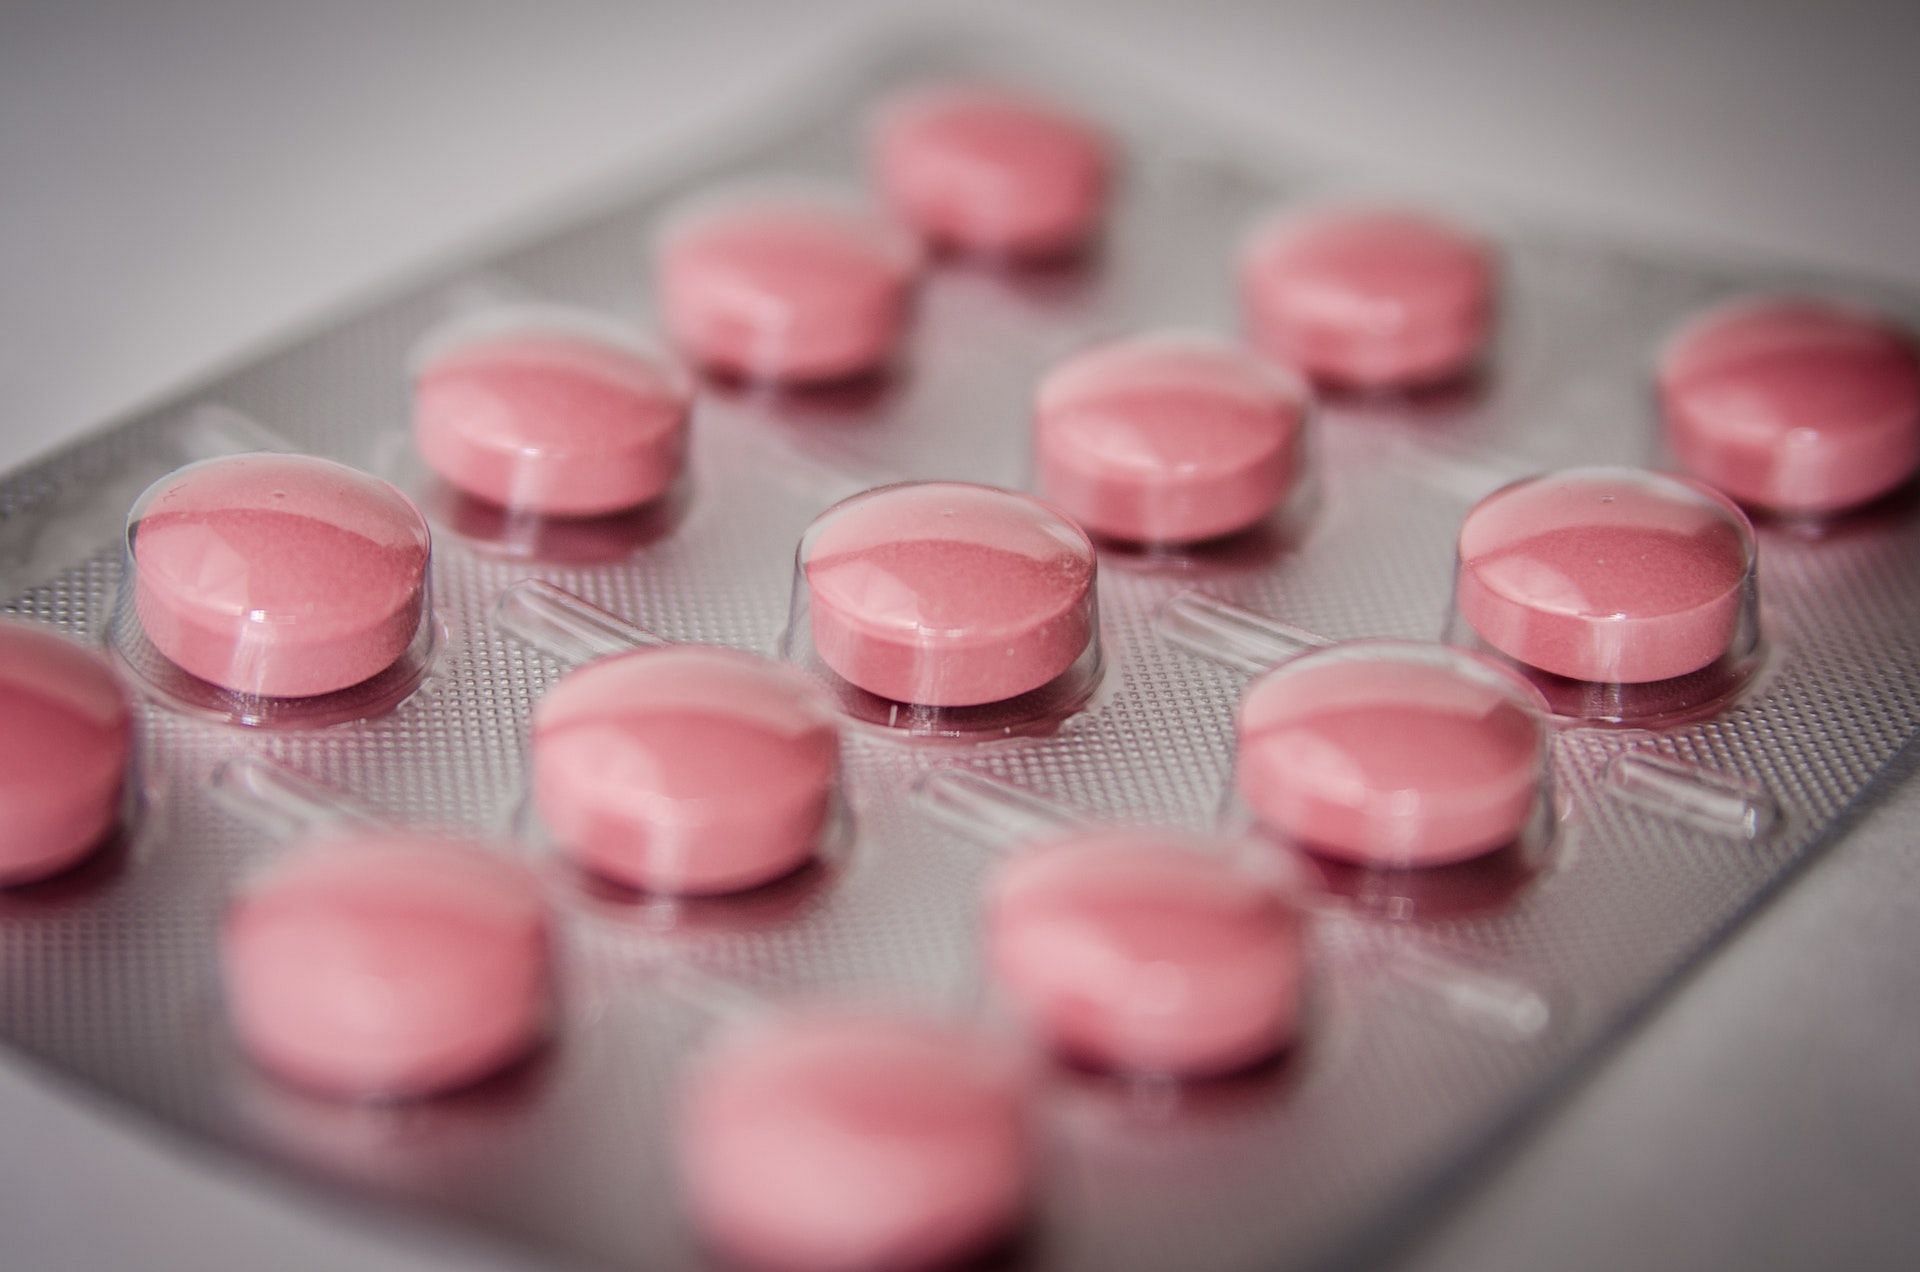 Take anti-prostaglandin medications for period diarrhea but on medical advice. (Photo via Pexels/Pixabay)